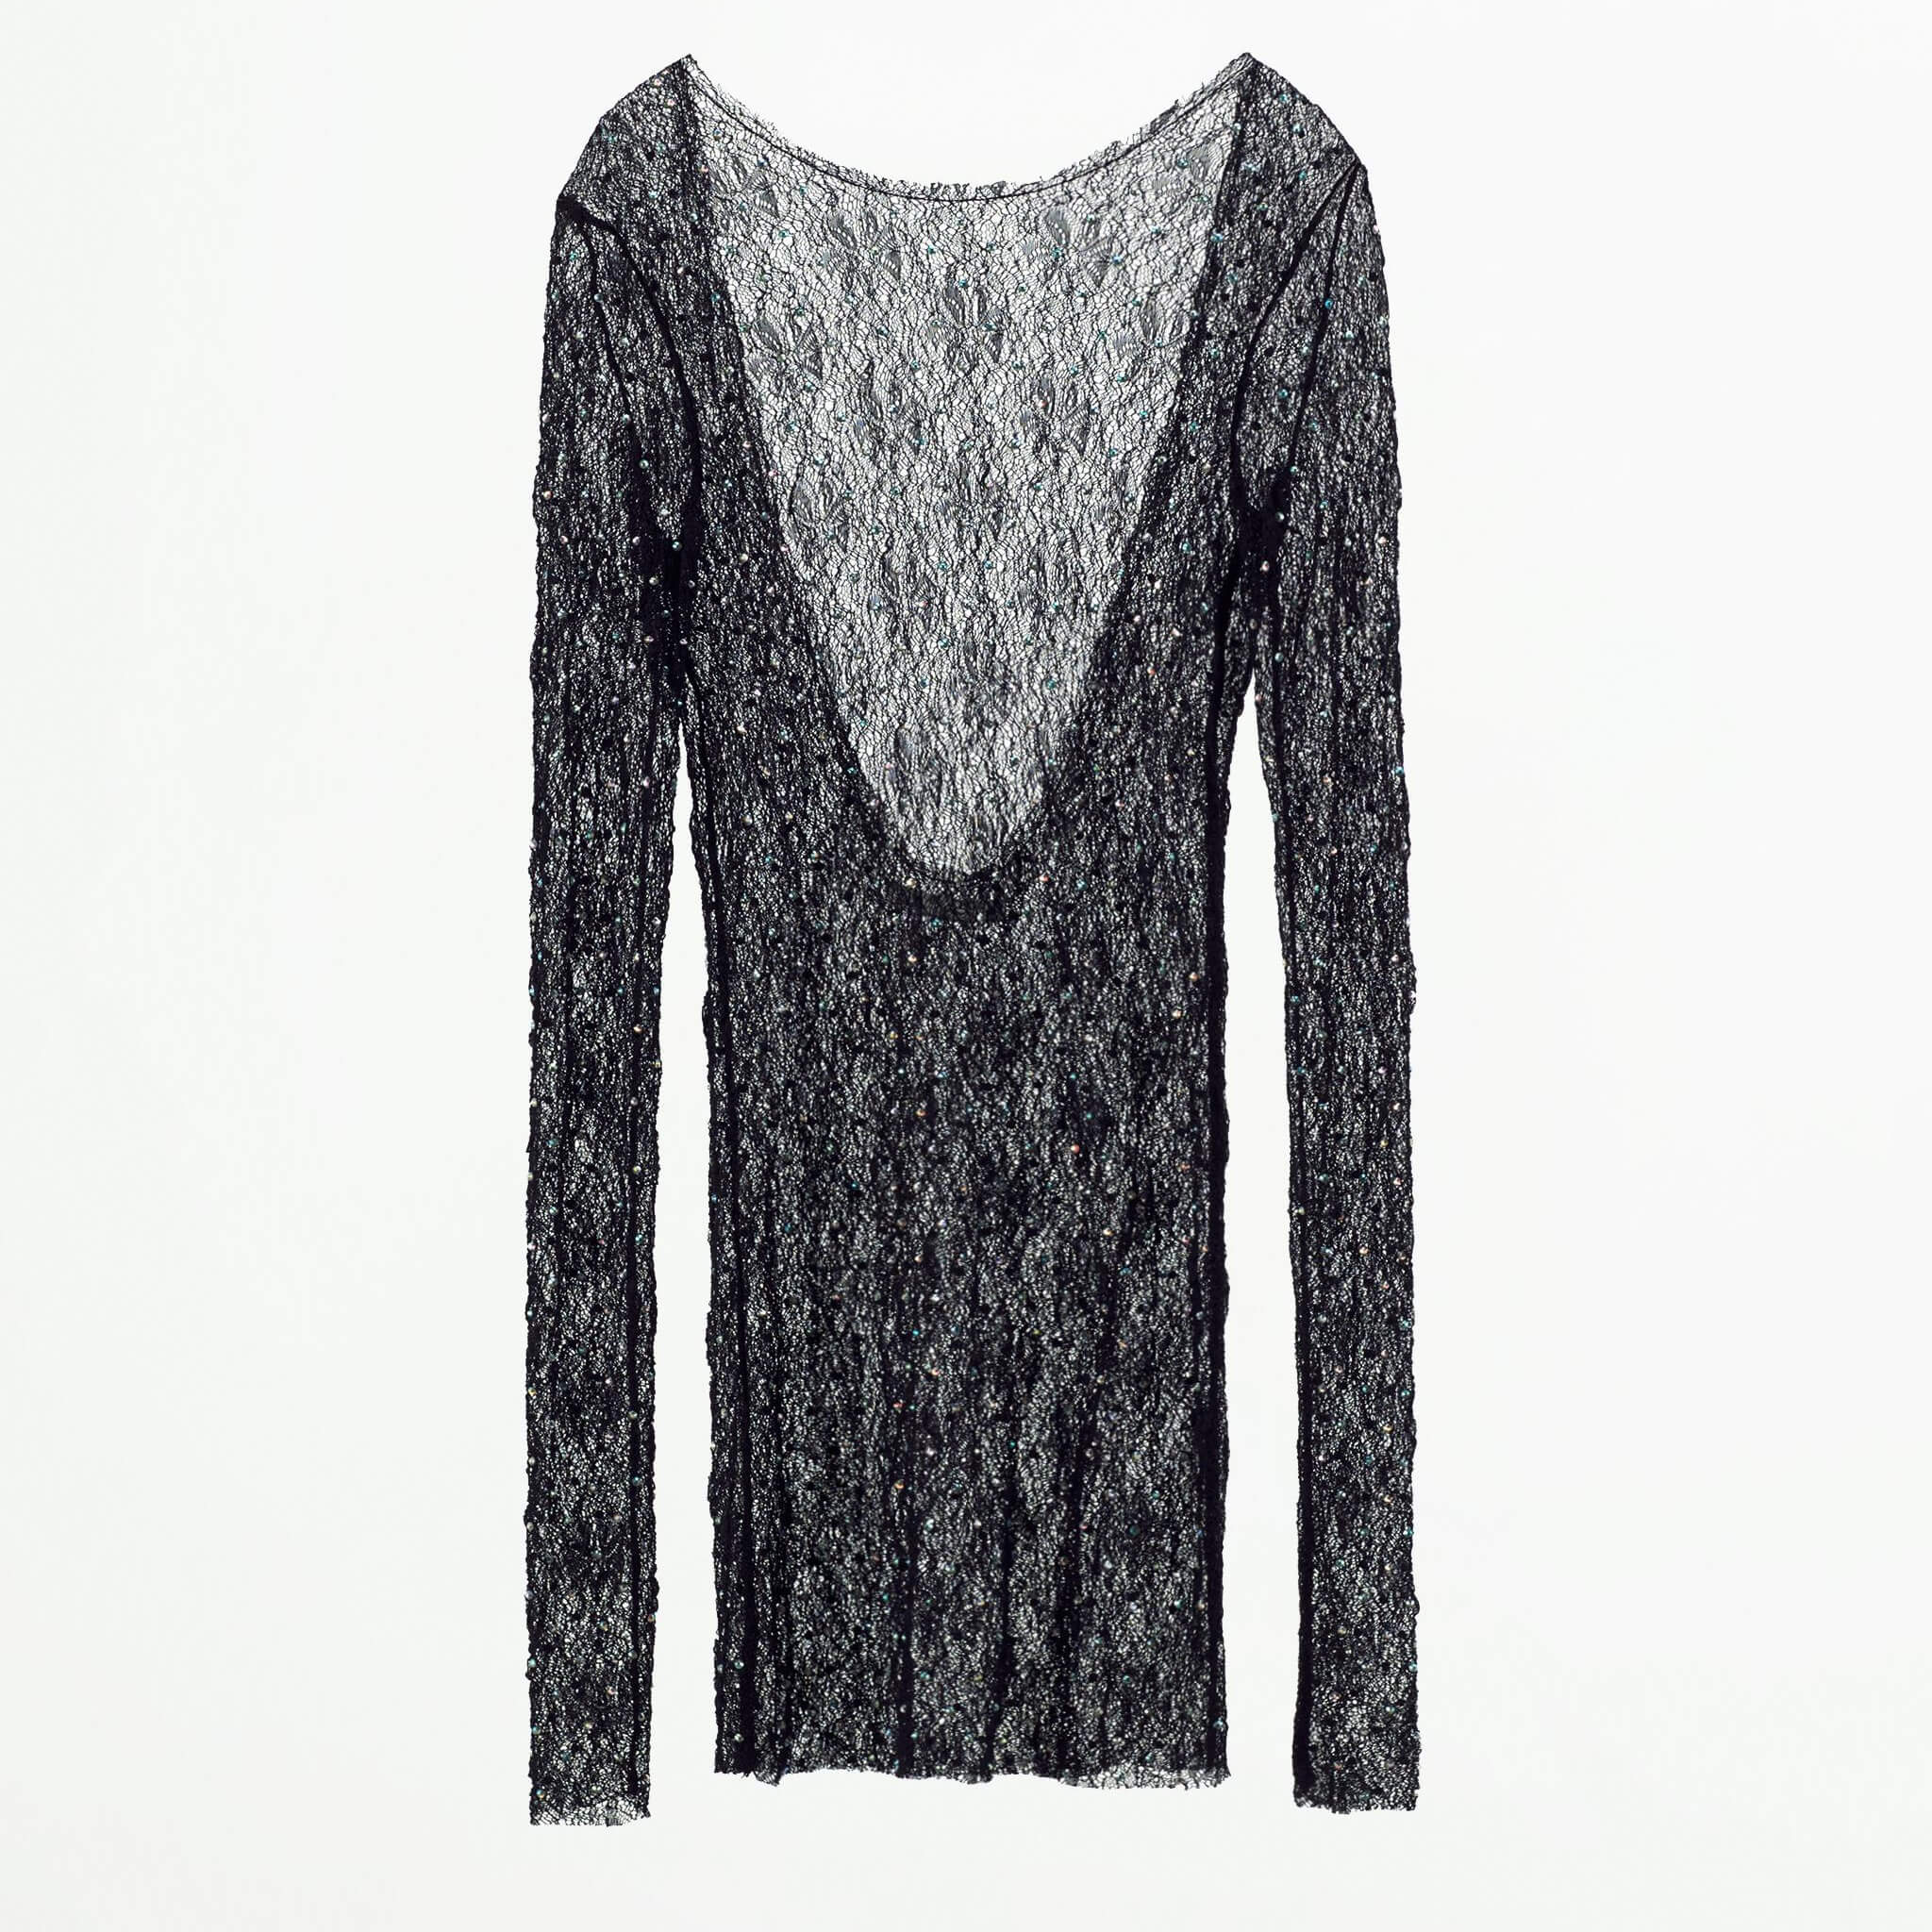 Топ Zara Lace With Rhinestones, черный футболка zara embellished with rhinestones кремовый